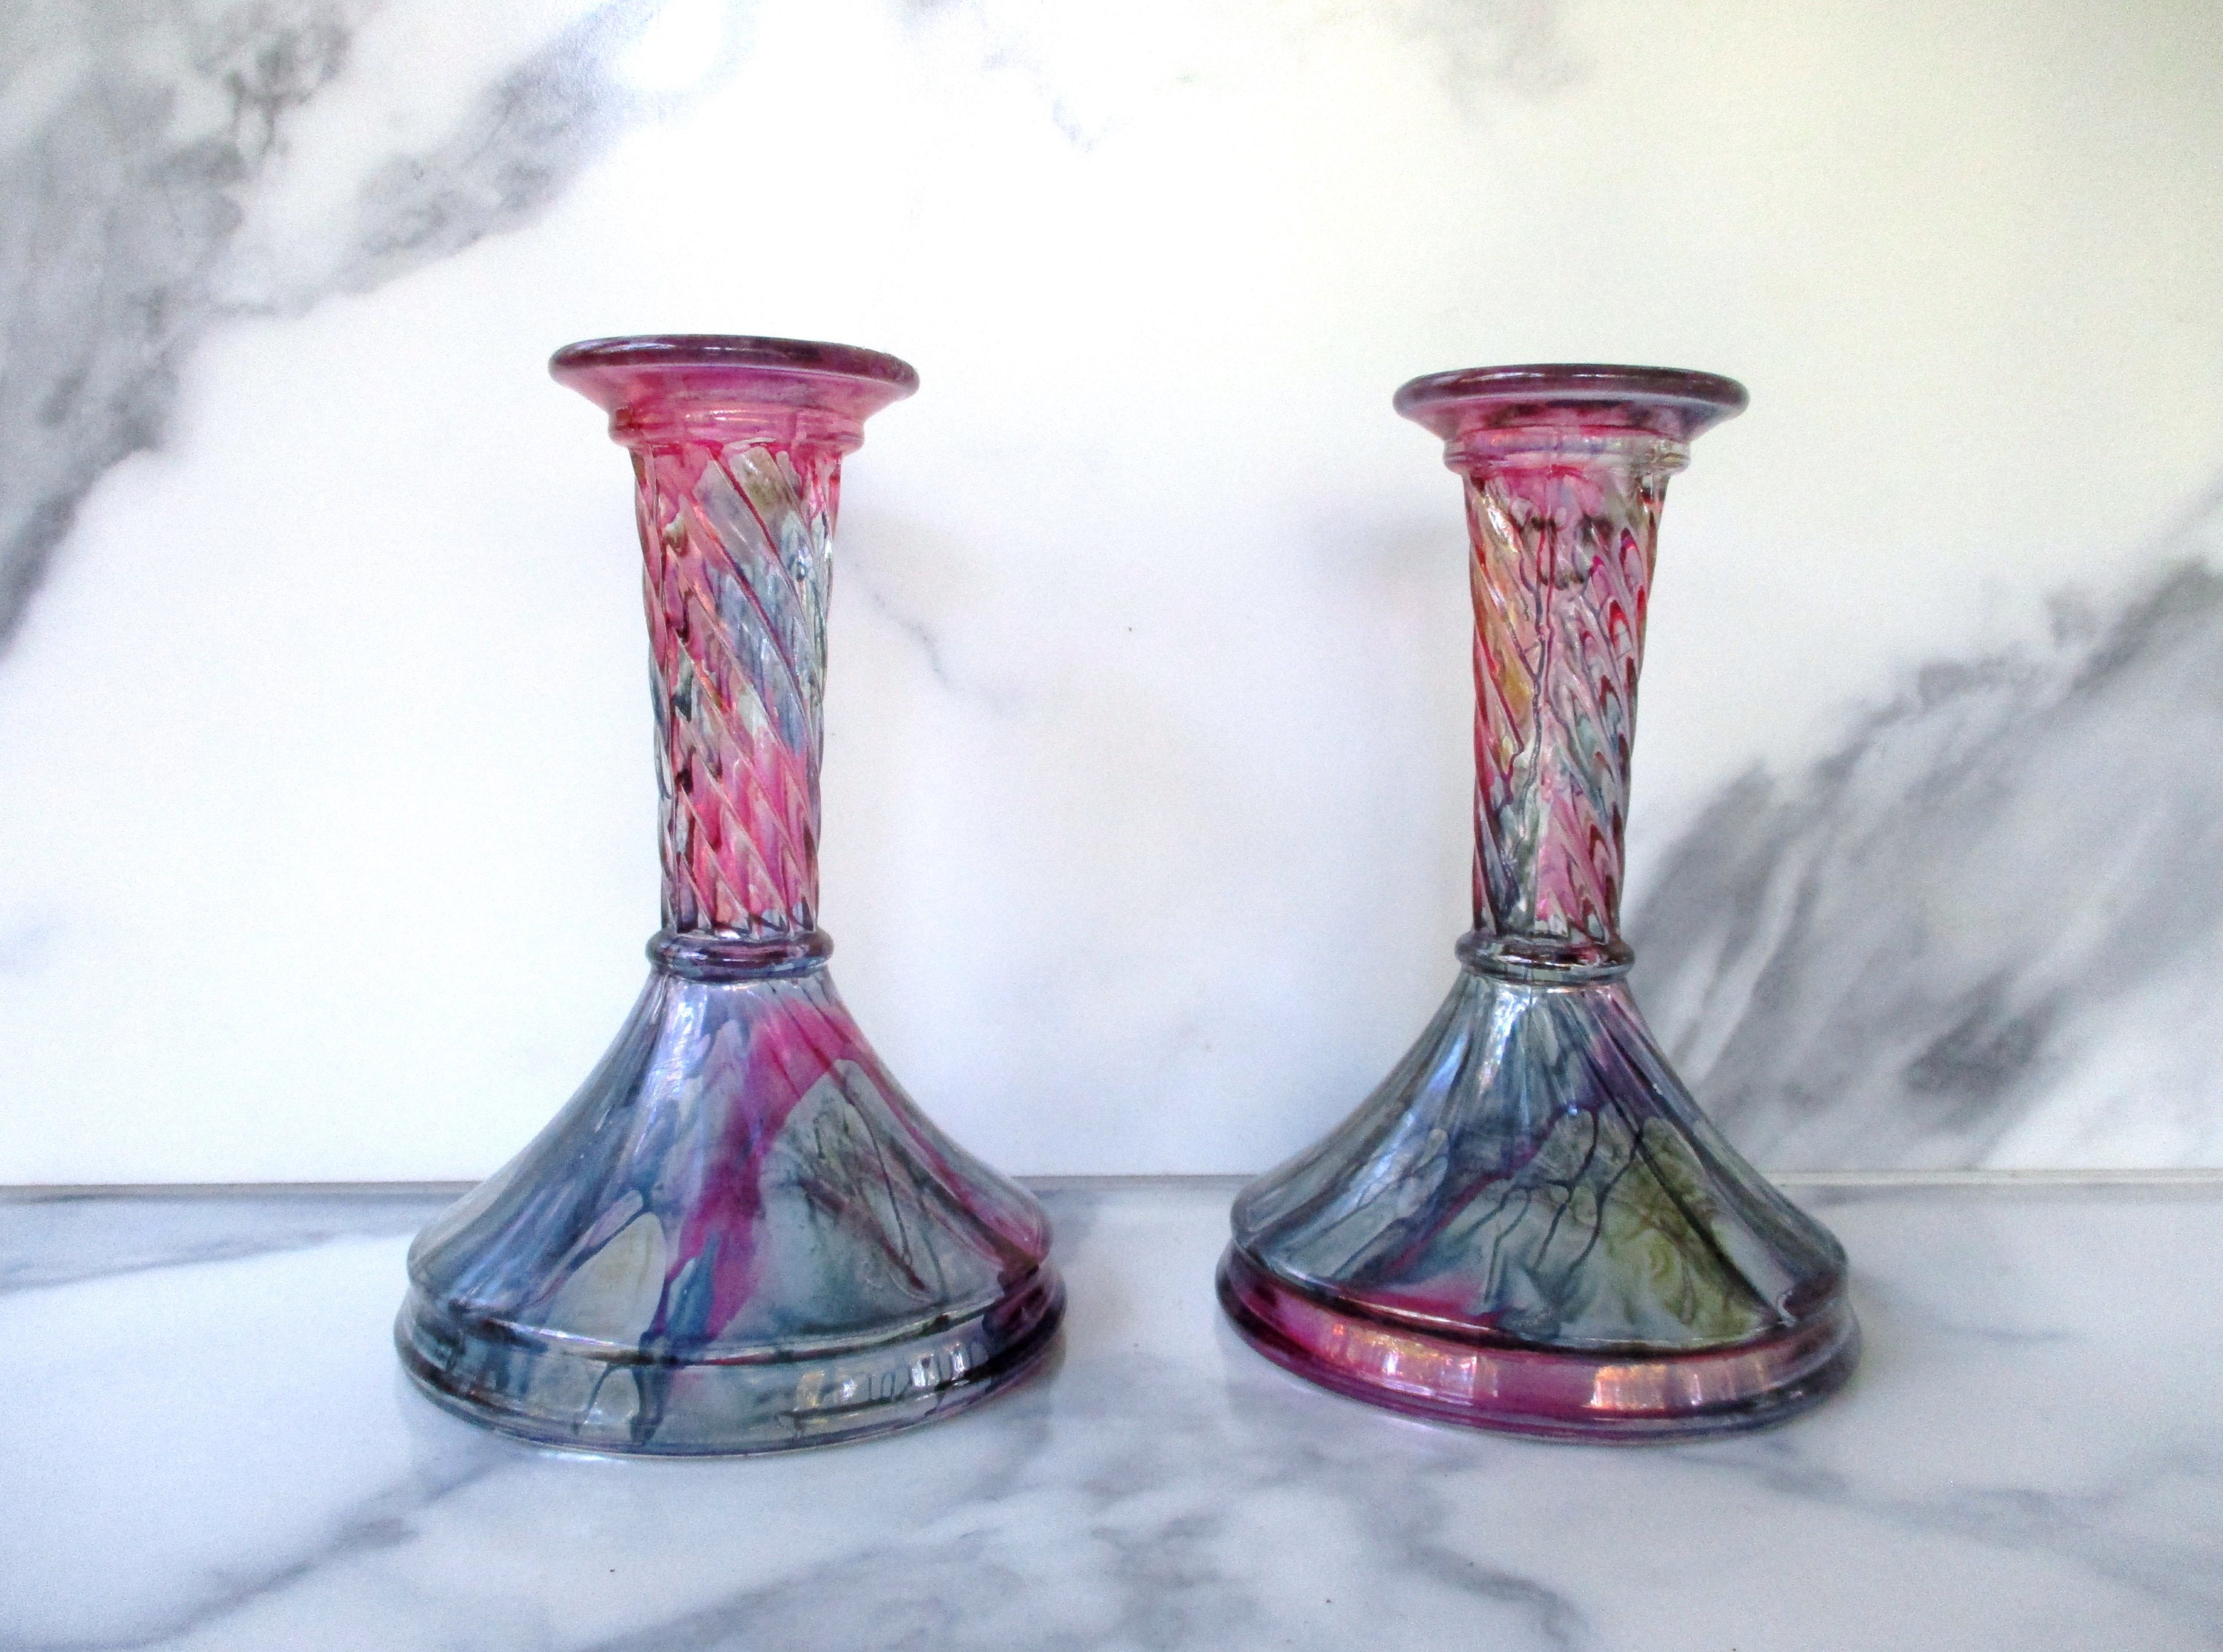 Rueven Wine Glasses by NOUVEAU ART GLASS Purple Swirl Tablescape 